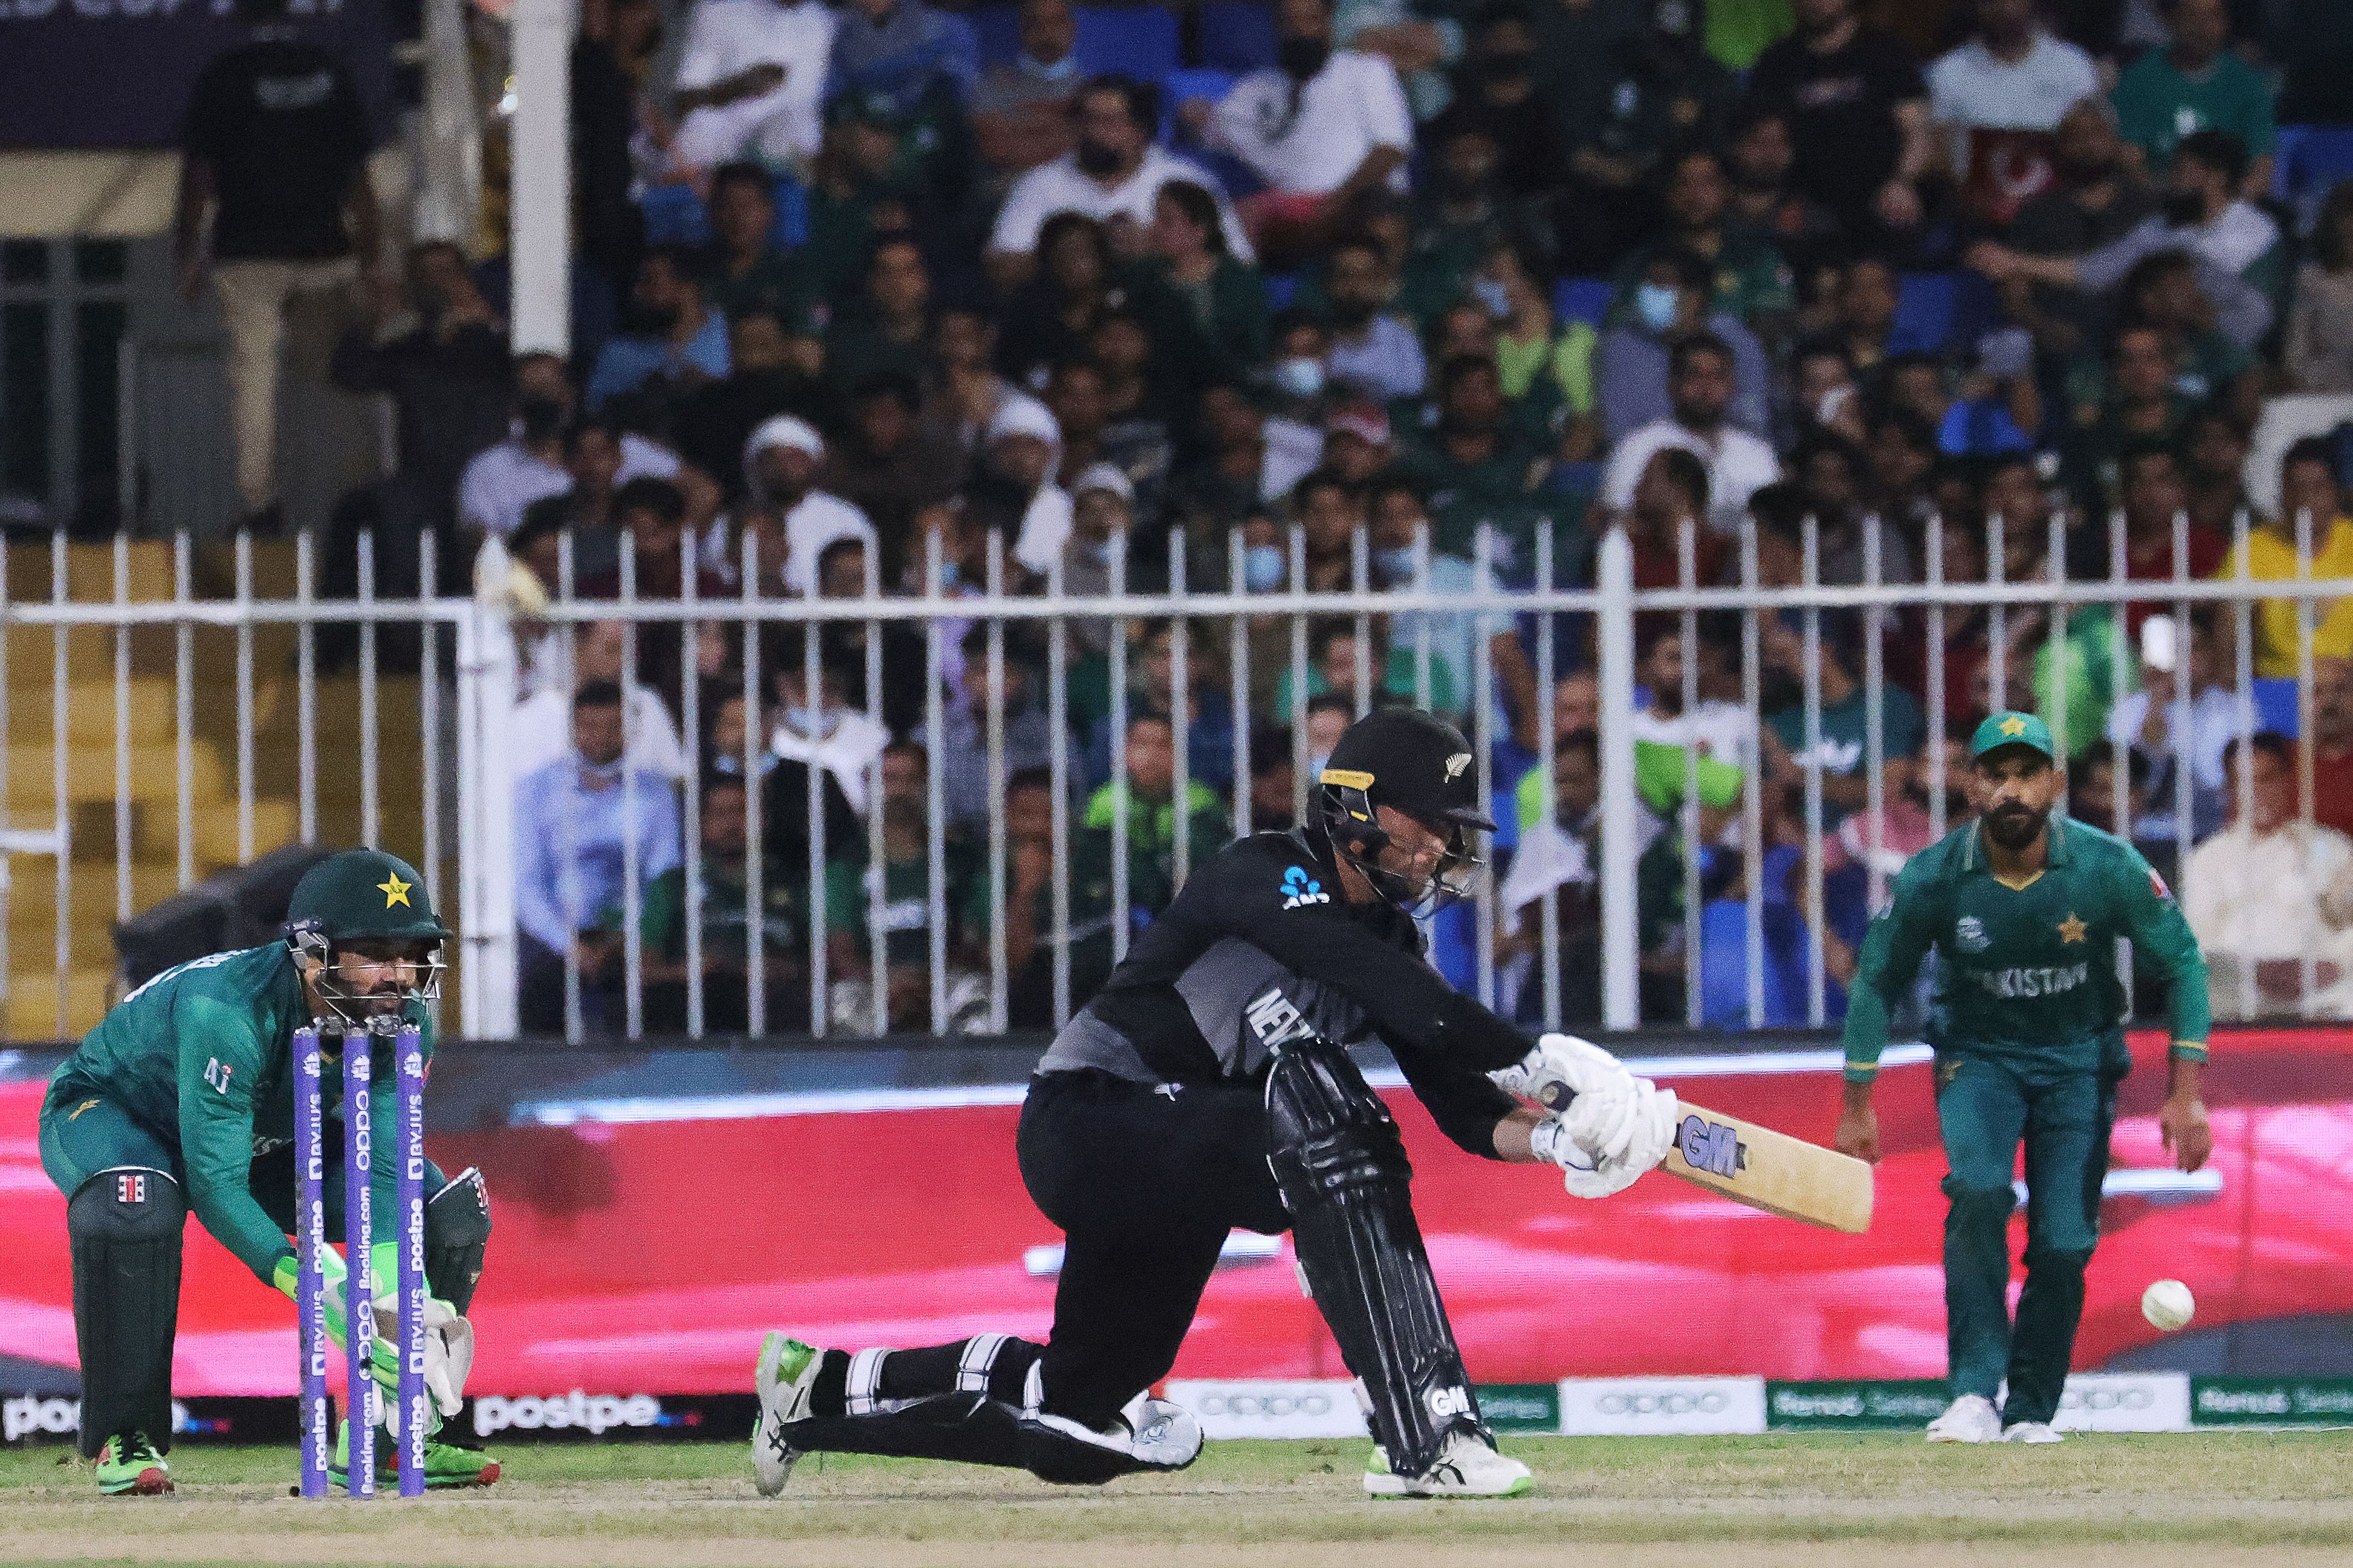 Pak fans chant security after Pakistan beat New Zealand at T20 WC